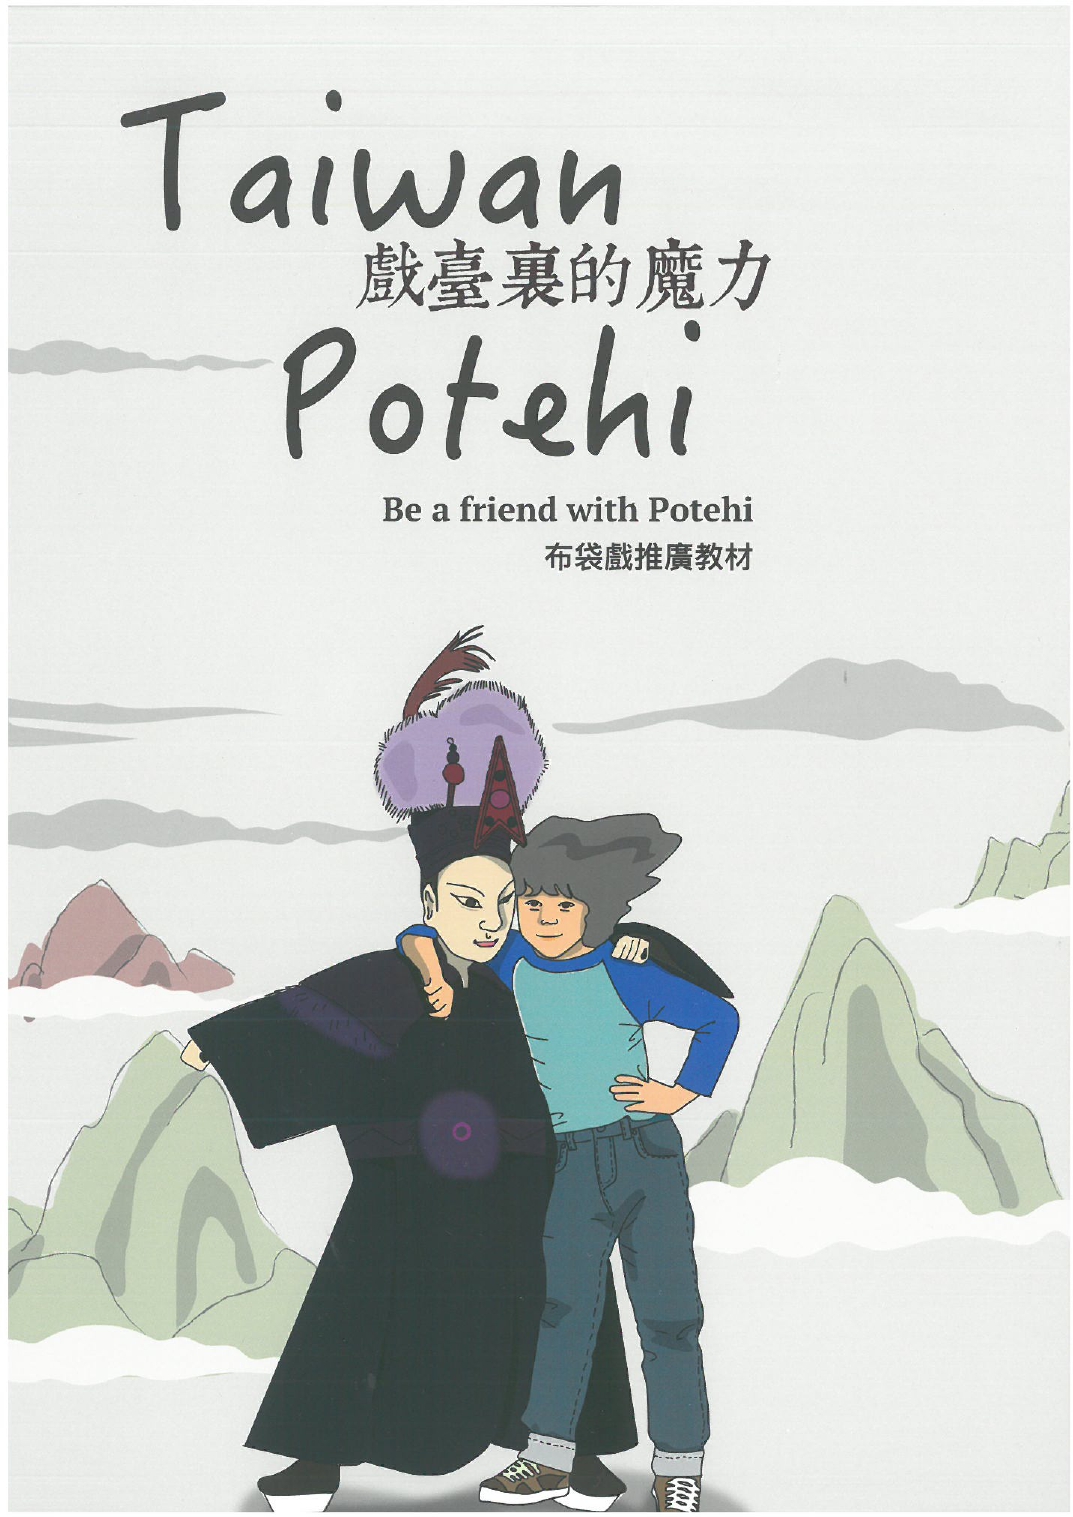 戲臺裡的魔力 Taiwan Potehi 布袋戲推廣教材